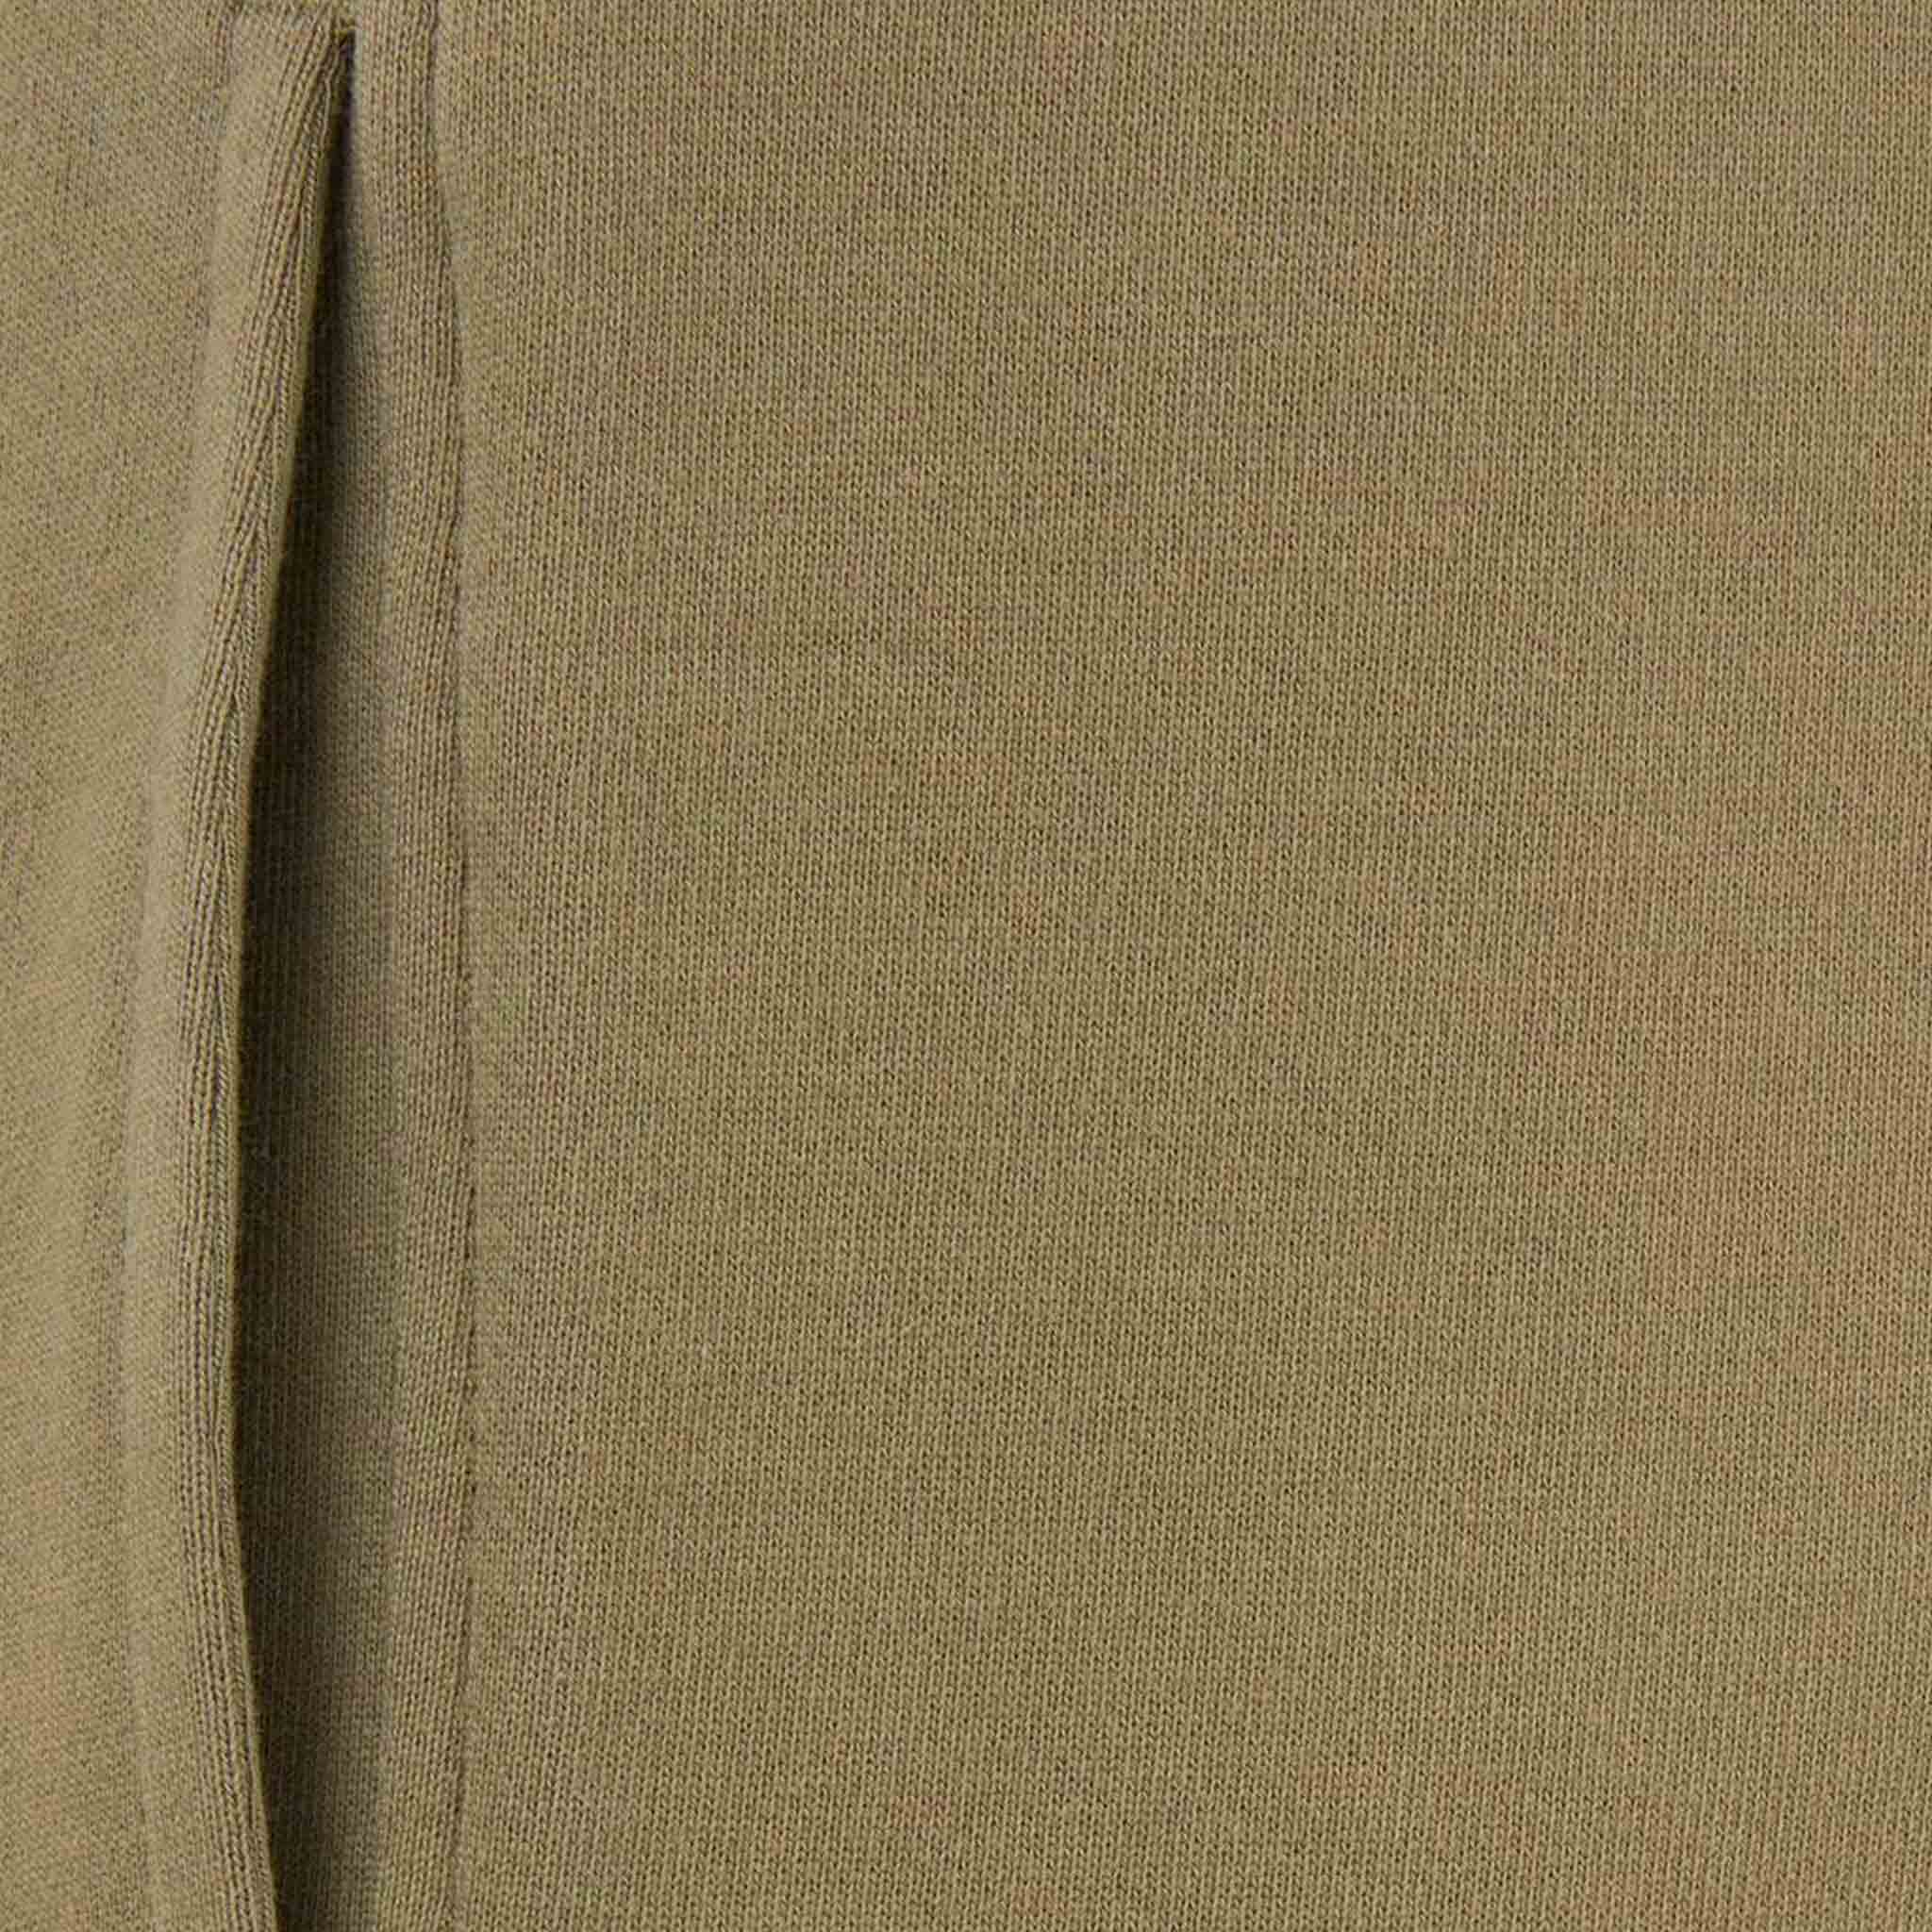 C.P. Company Diagonal Raised Fleece Sweatpants in Lead Grey